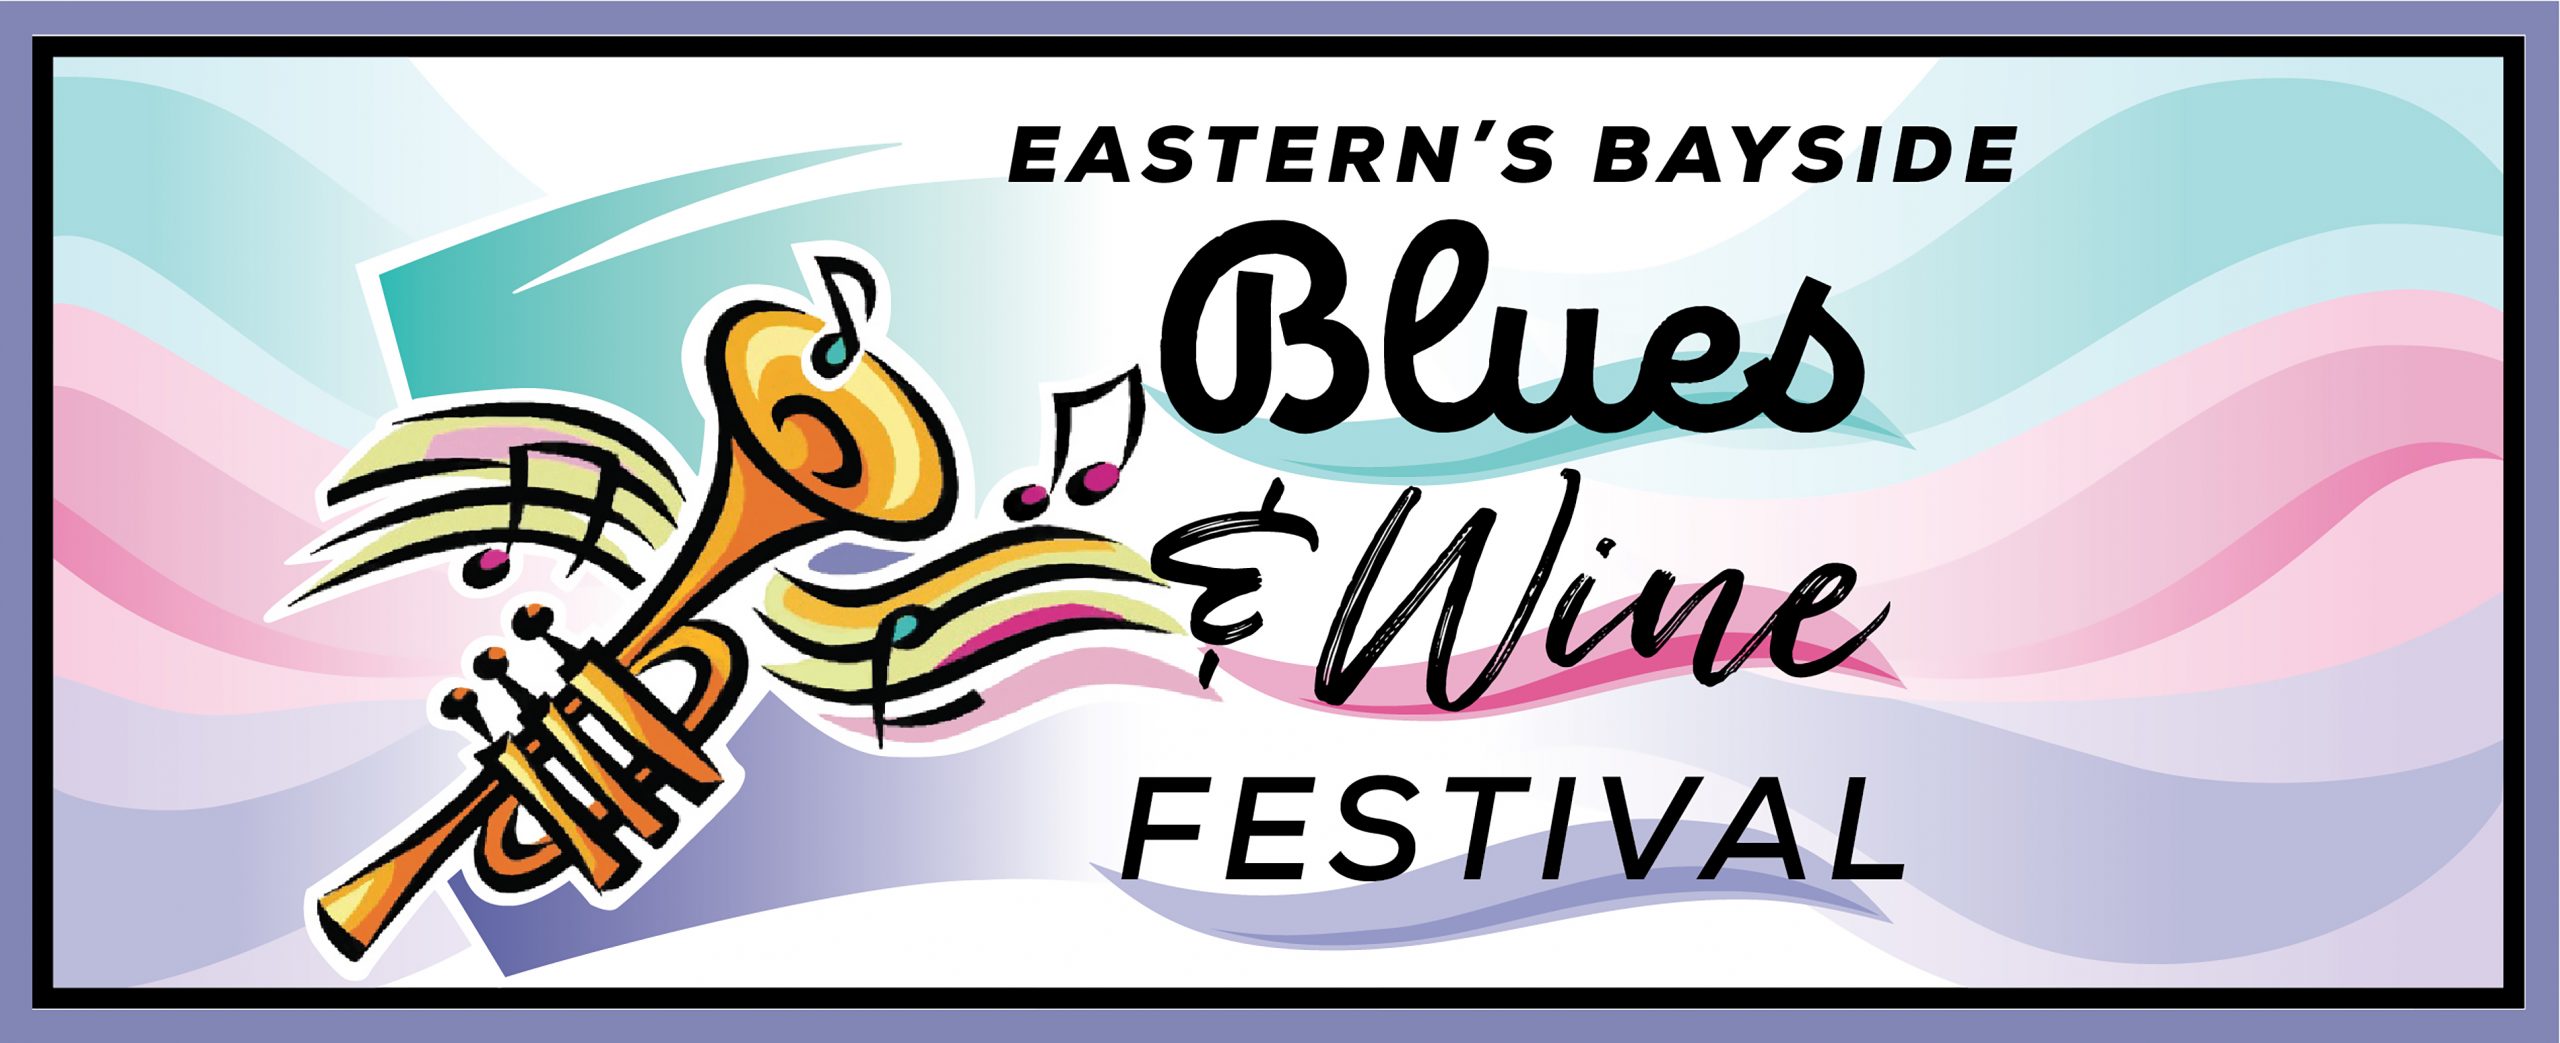 Eastern's Bayside Festival